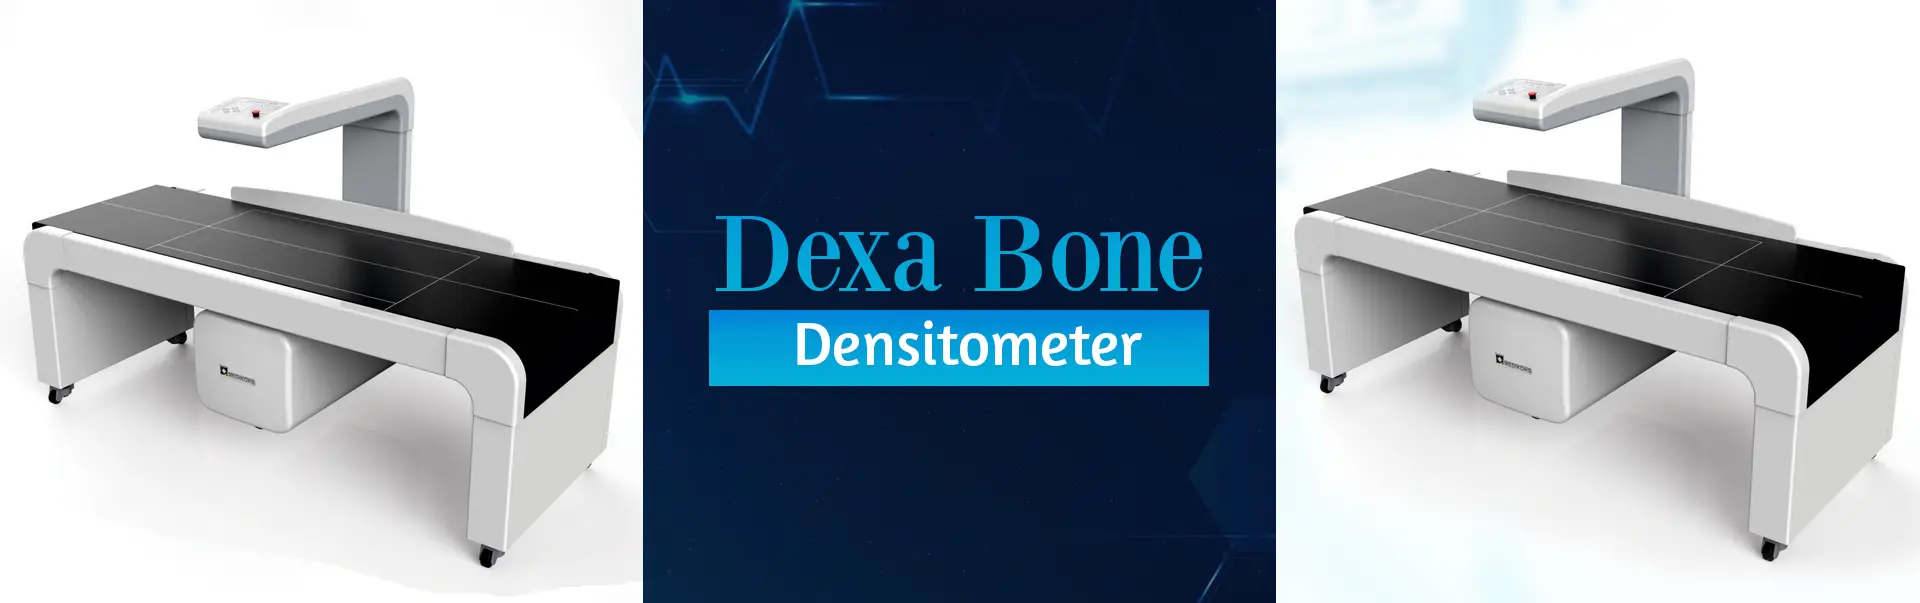 Dexa Bone Densitometer Manufacturers in Jamnagar